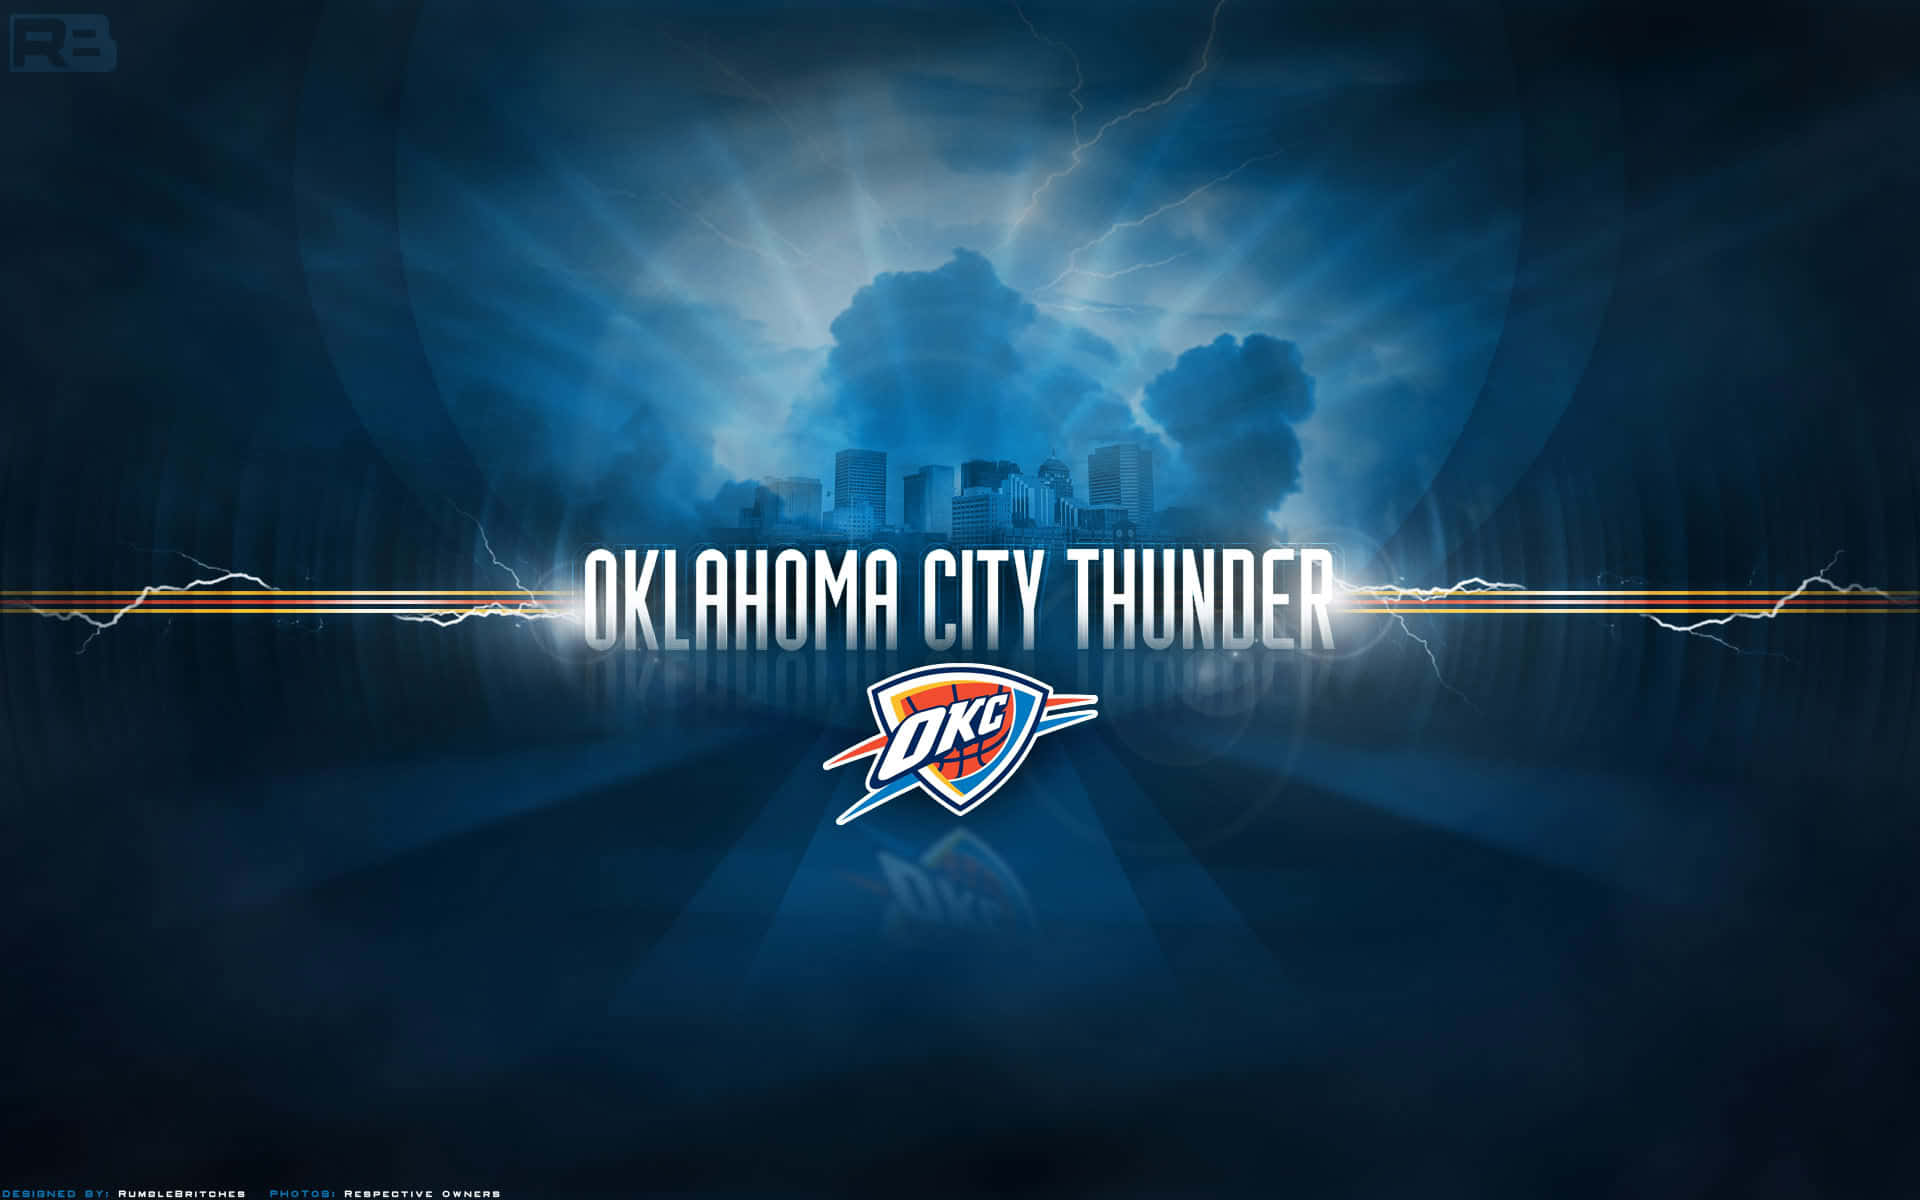 Blitzschlagoklahoma City Thunders Logo Wallpaper